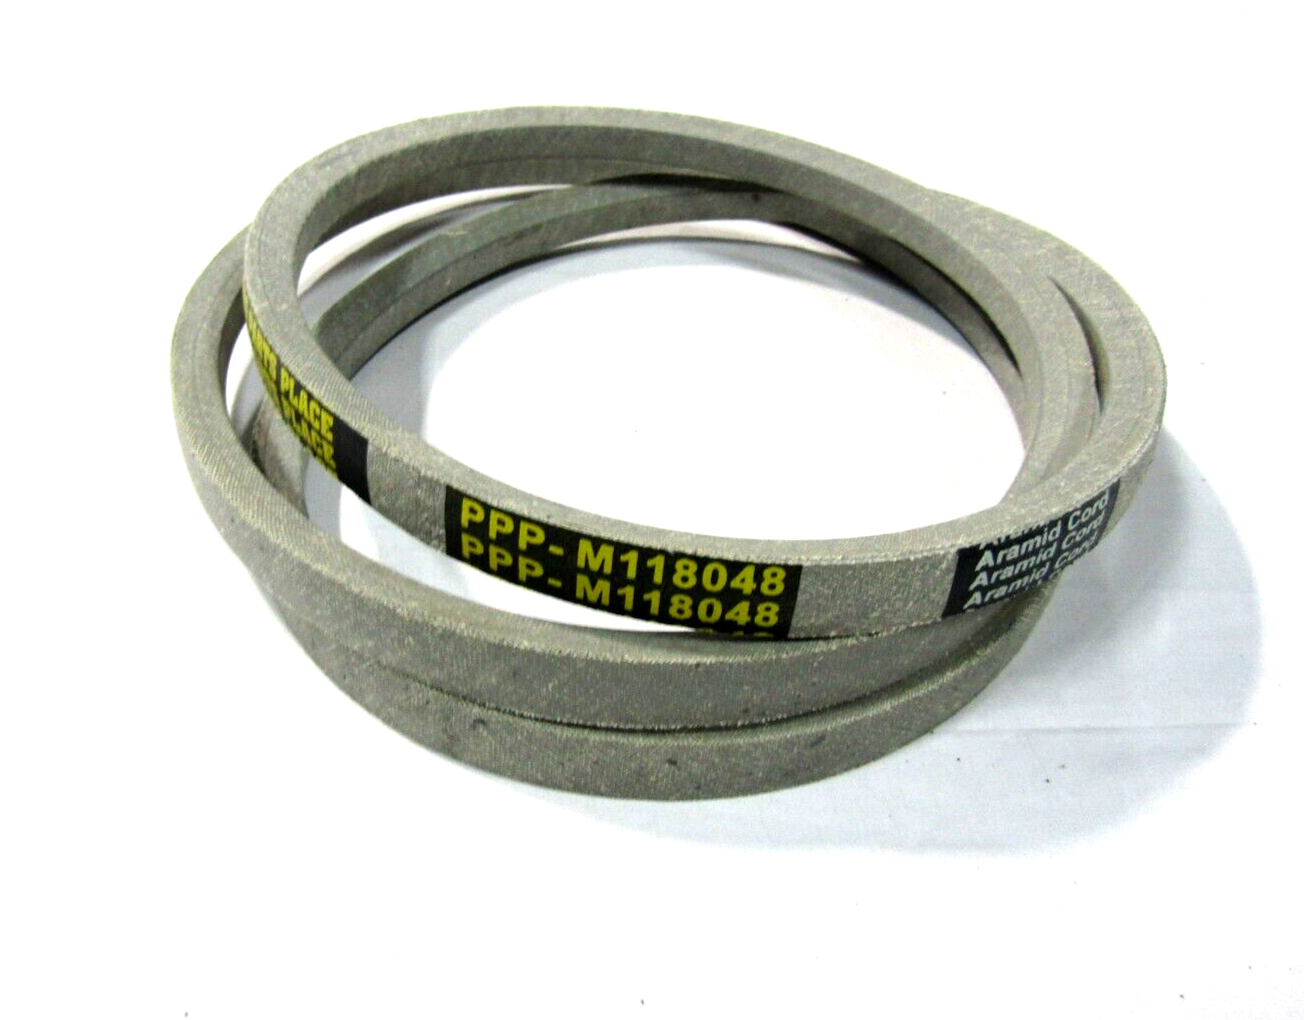 Drive belt will fit John Deere M118048 325 335 345 with serial # below 07000